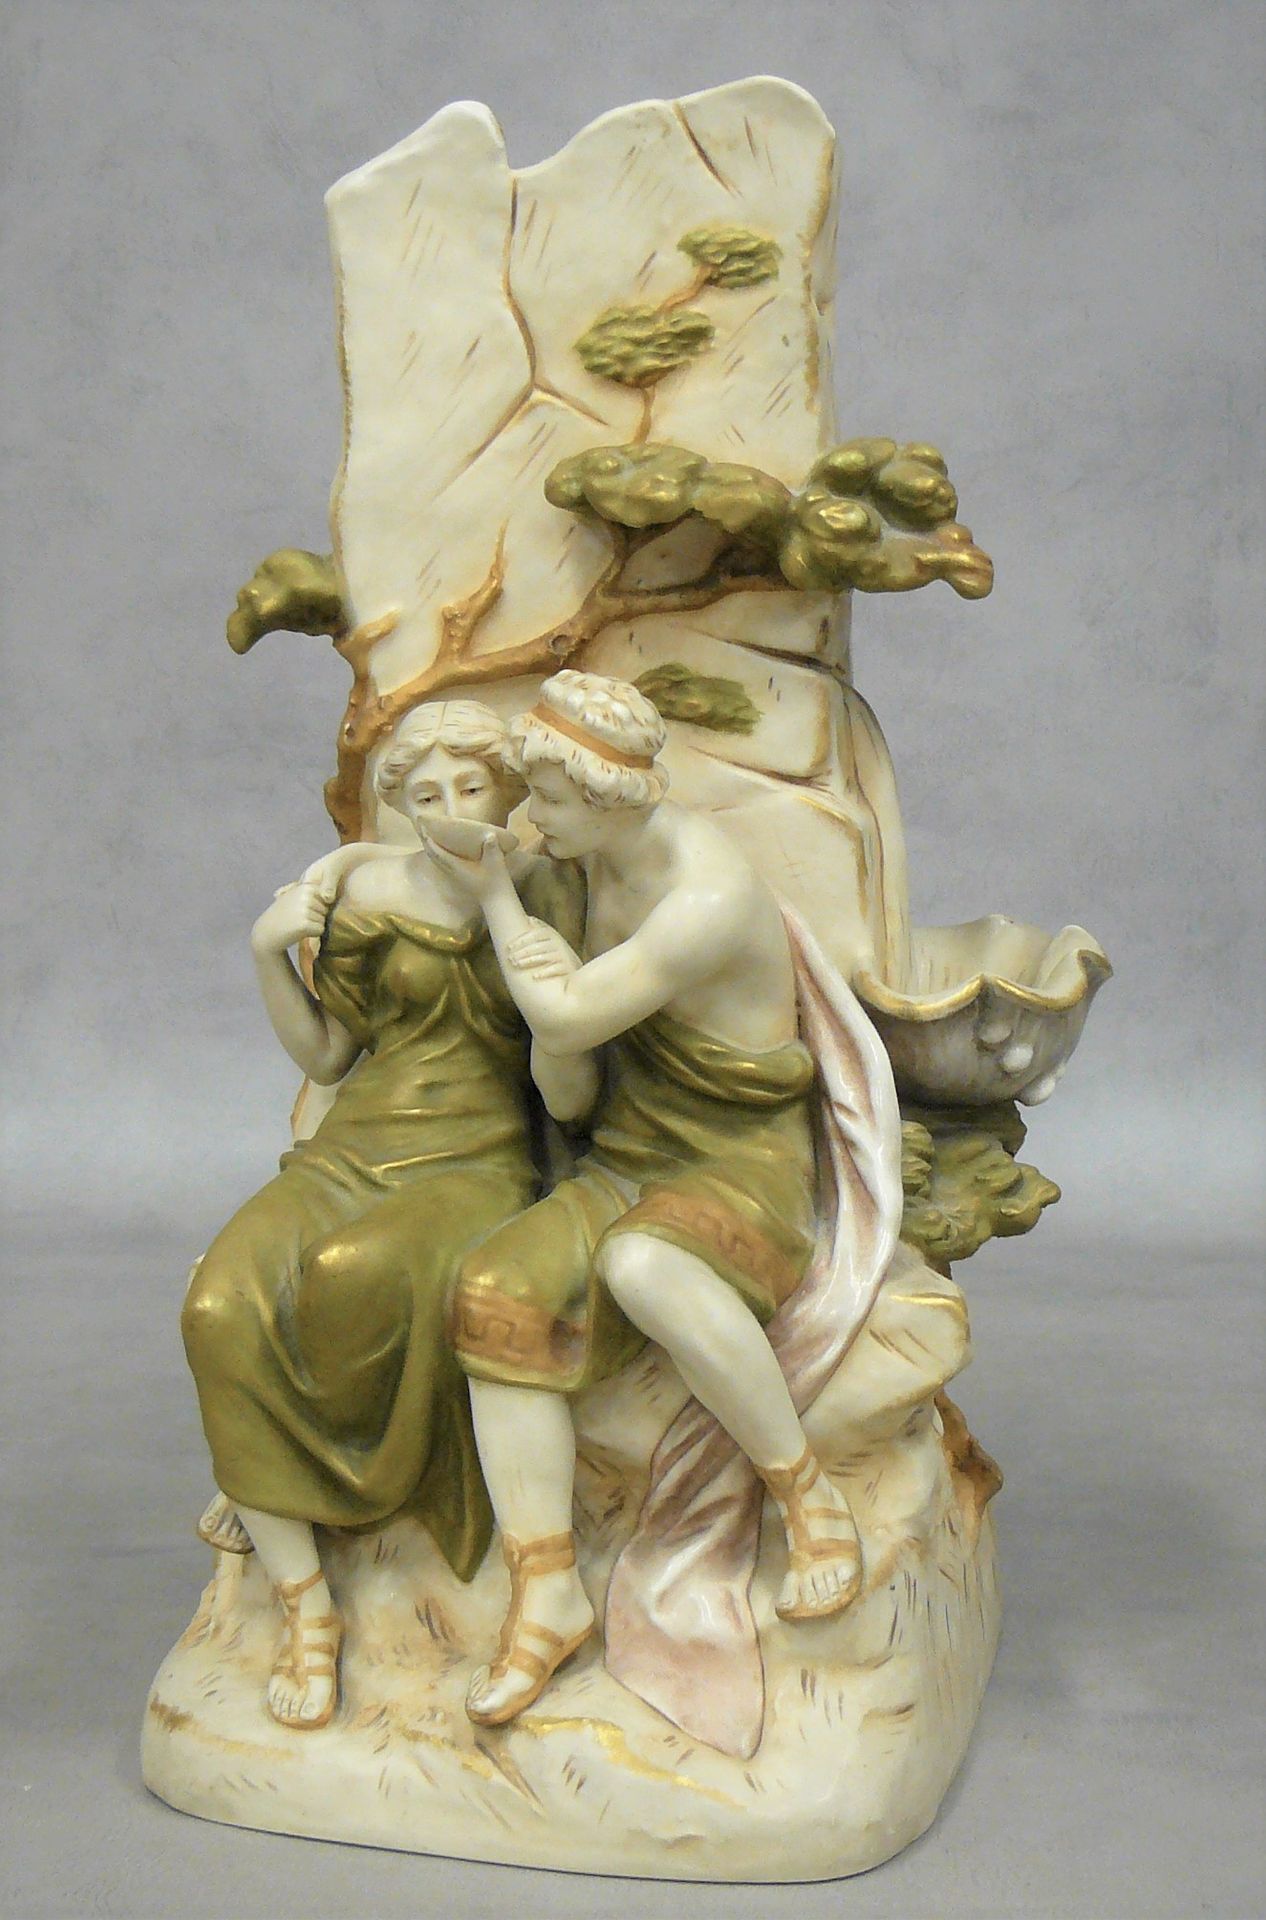 ROYAL DUX ROYAL DUX：多色陶瓷花瓶：一对夫妇在喝喷泉 - 高37.5厘米，宽18.5厘米